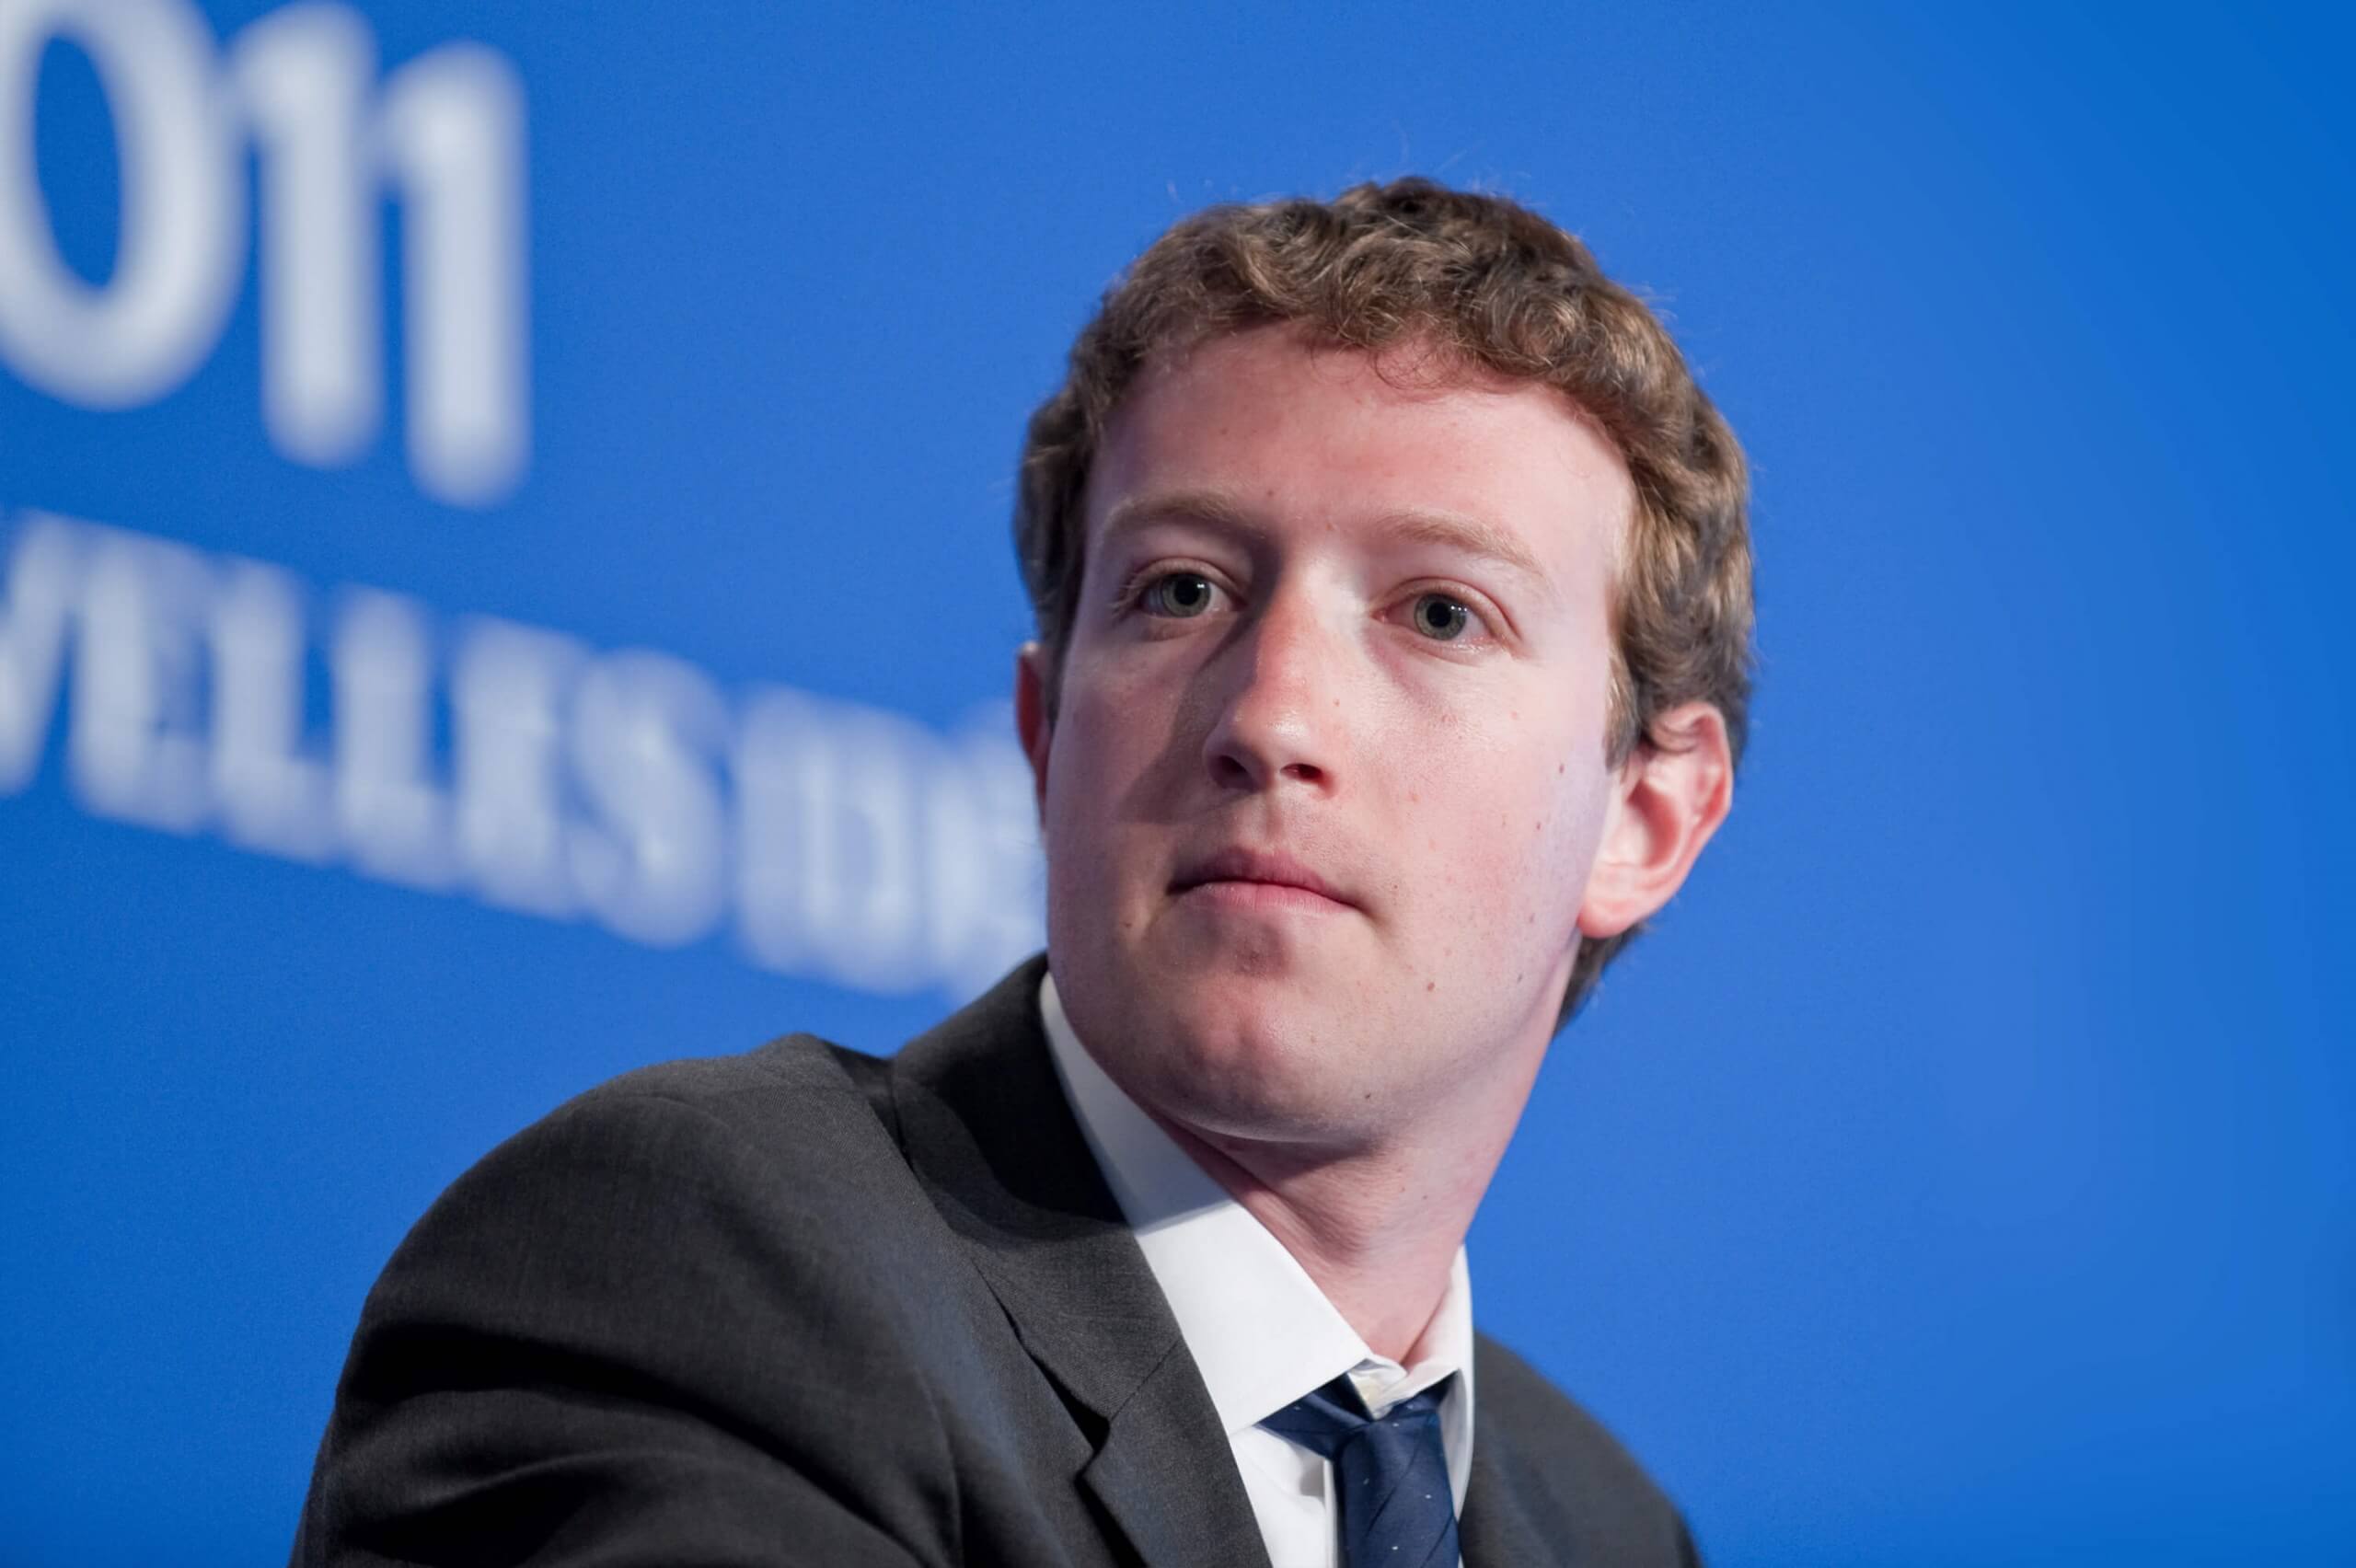 Leaked internal meetings reveal Zuckerberg will fight if lawmakers try to break up Facebook